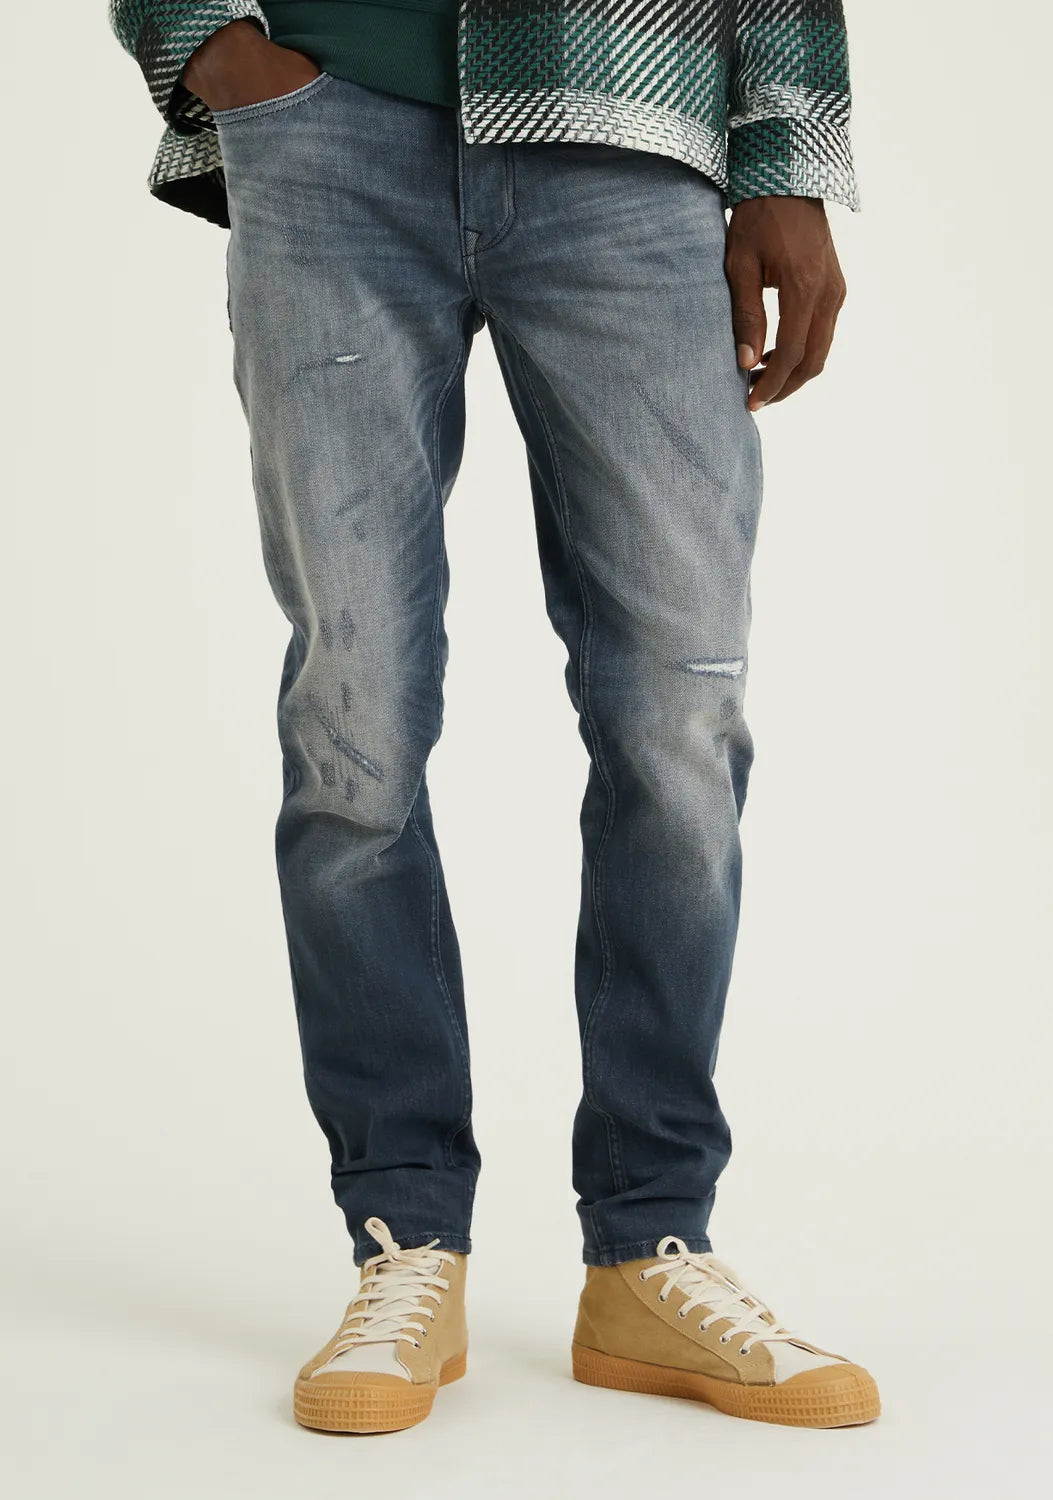 CHASIN | Evan Alix Jeans | D84 GREY TINTED